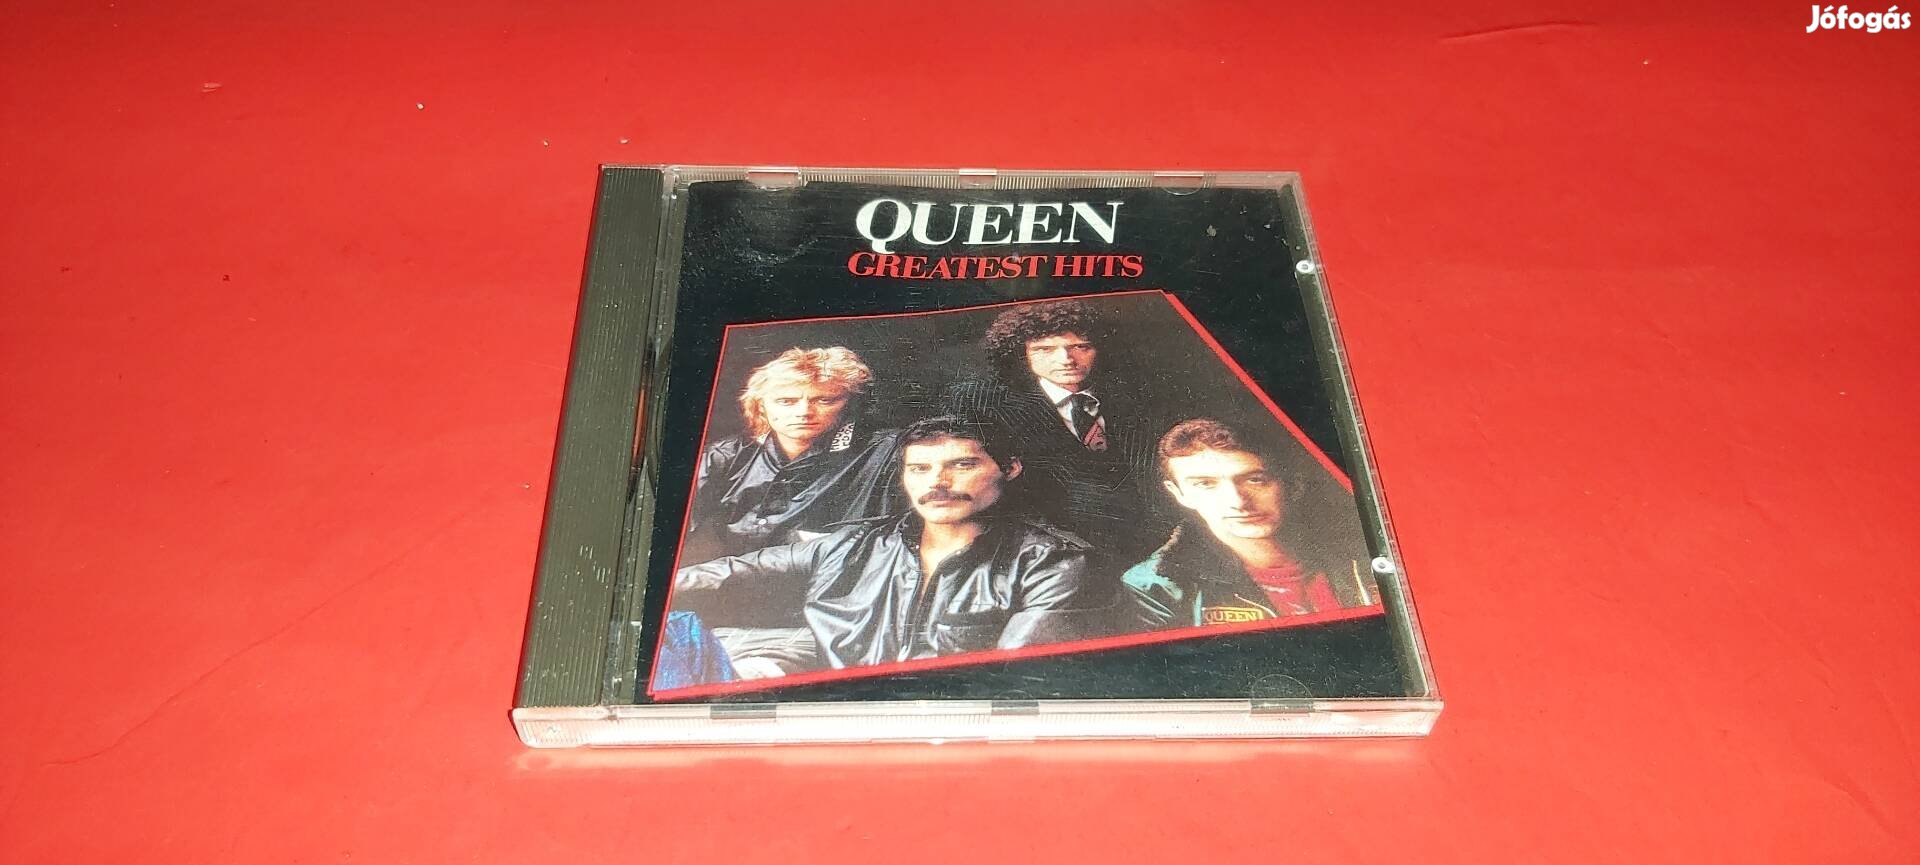 Queen Greatest hits Cd 1981